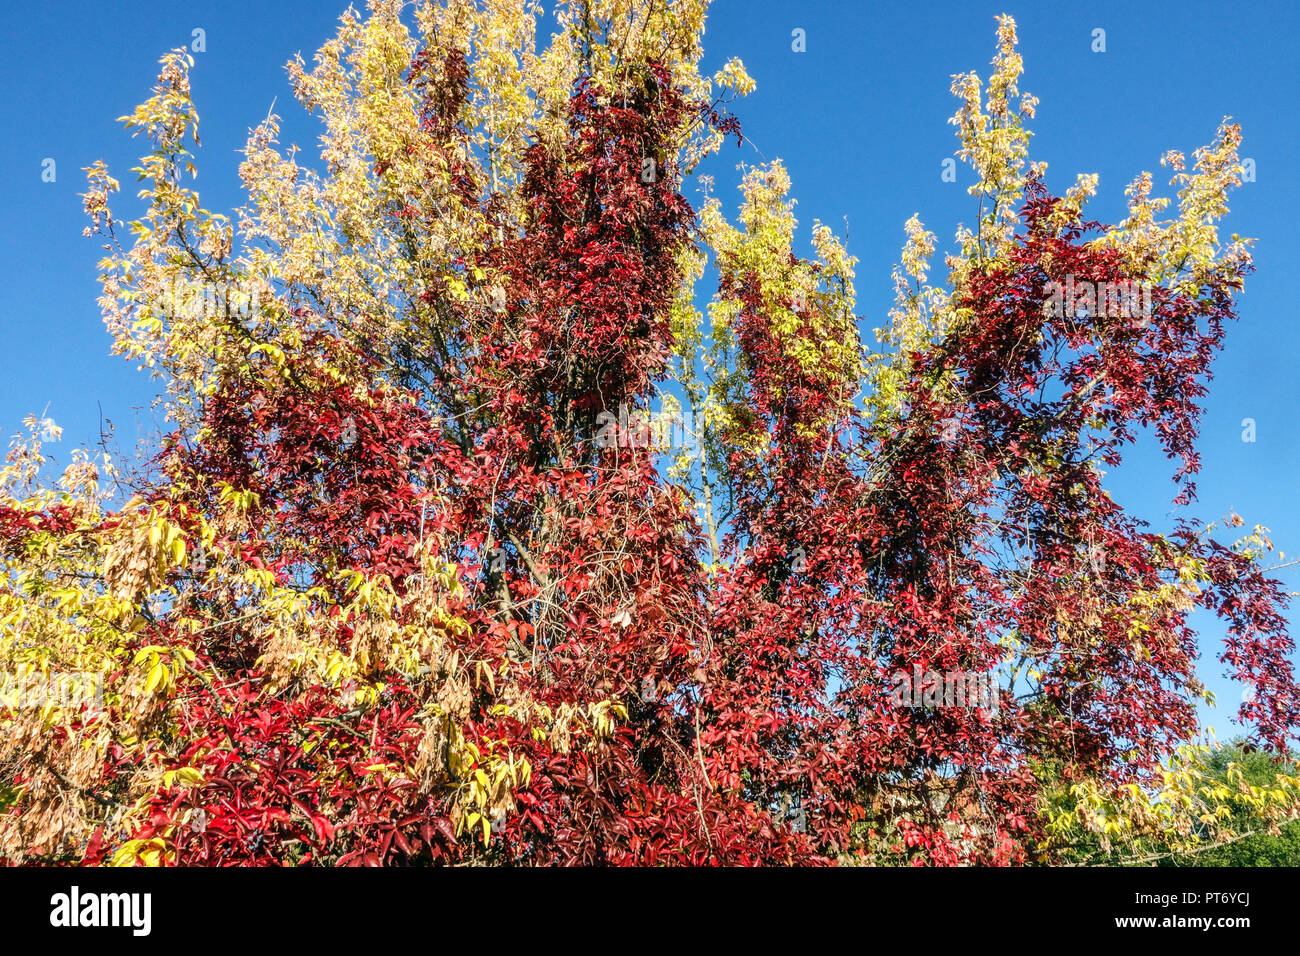 Indian summer Virginia Creeper climbing on Acer negundo tree, Red yellow autumn leaves Stock Photo